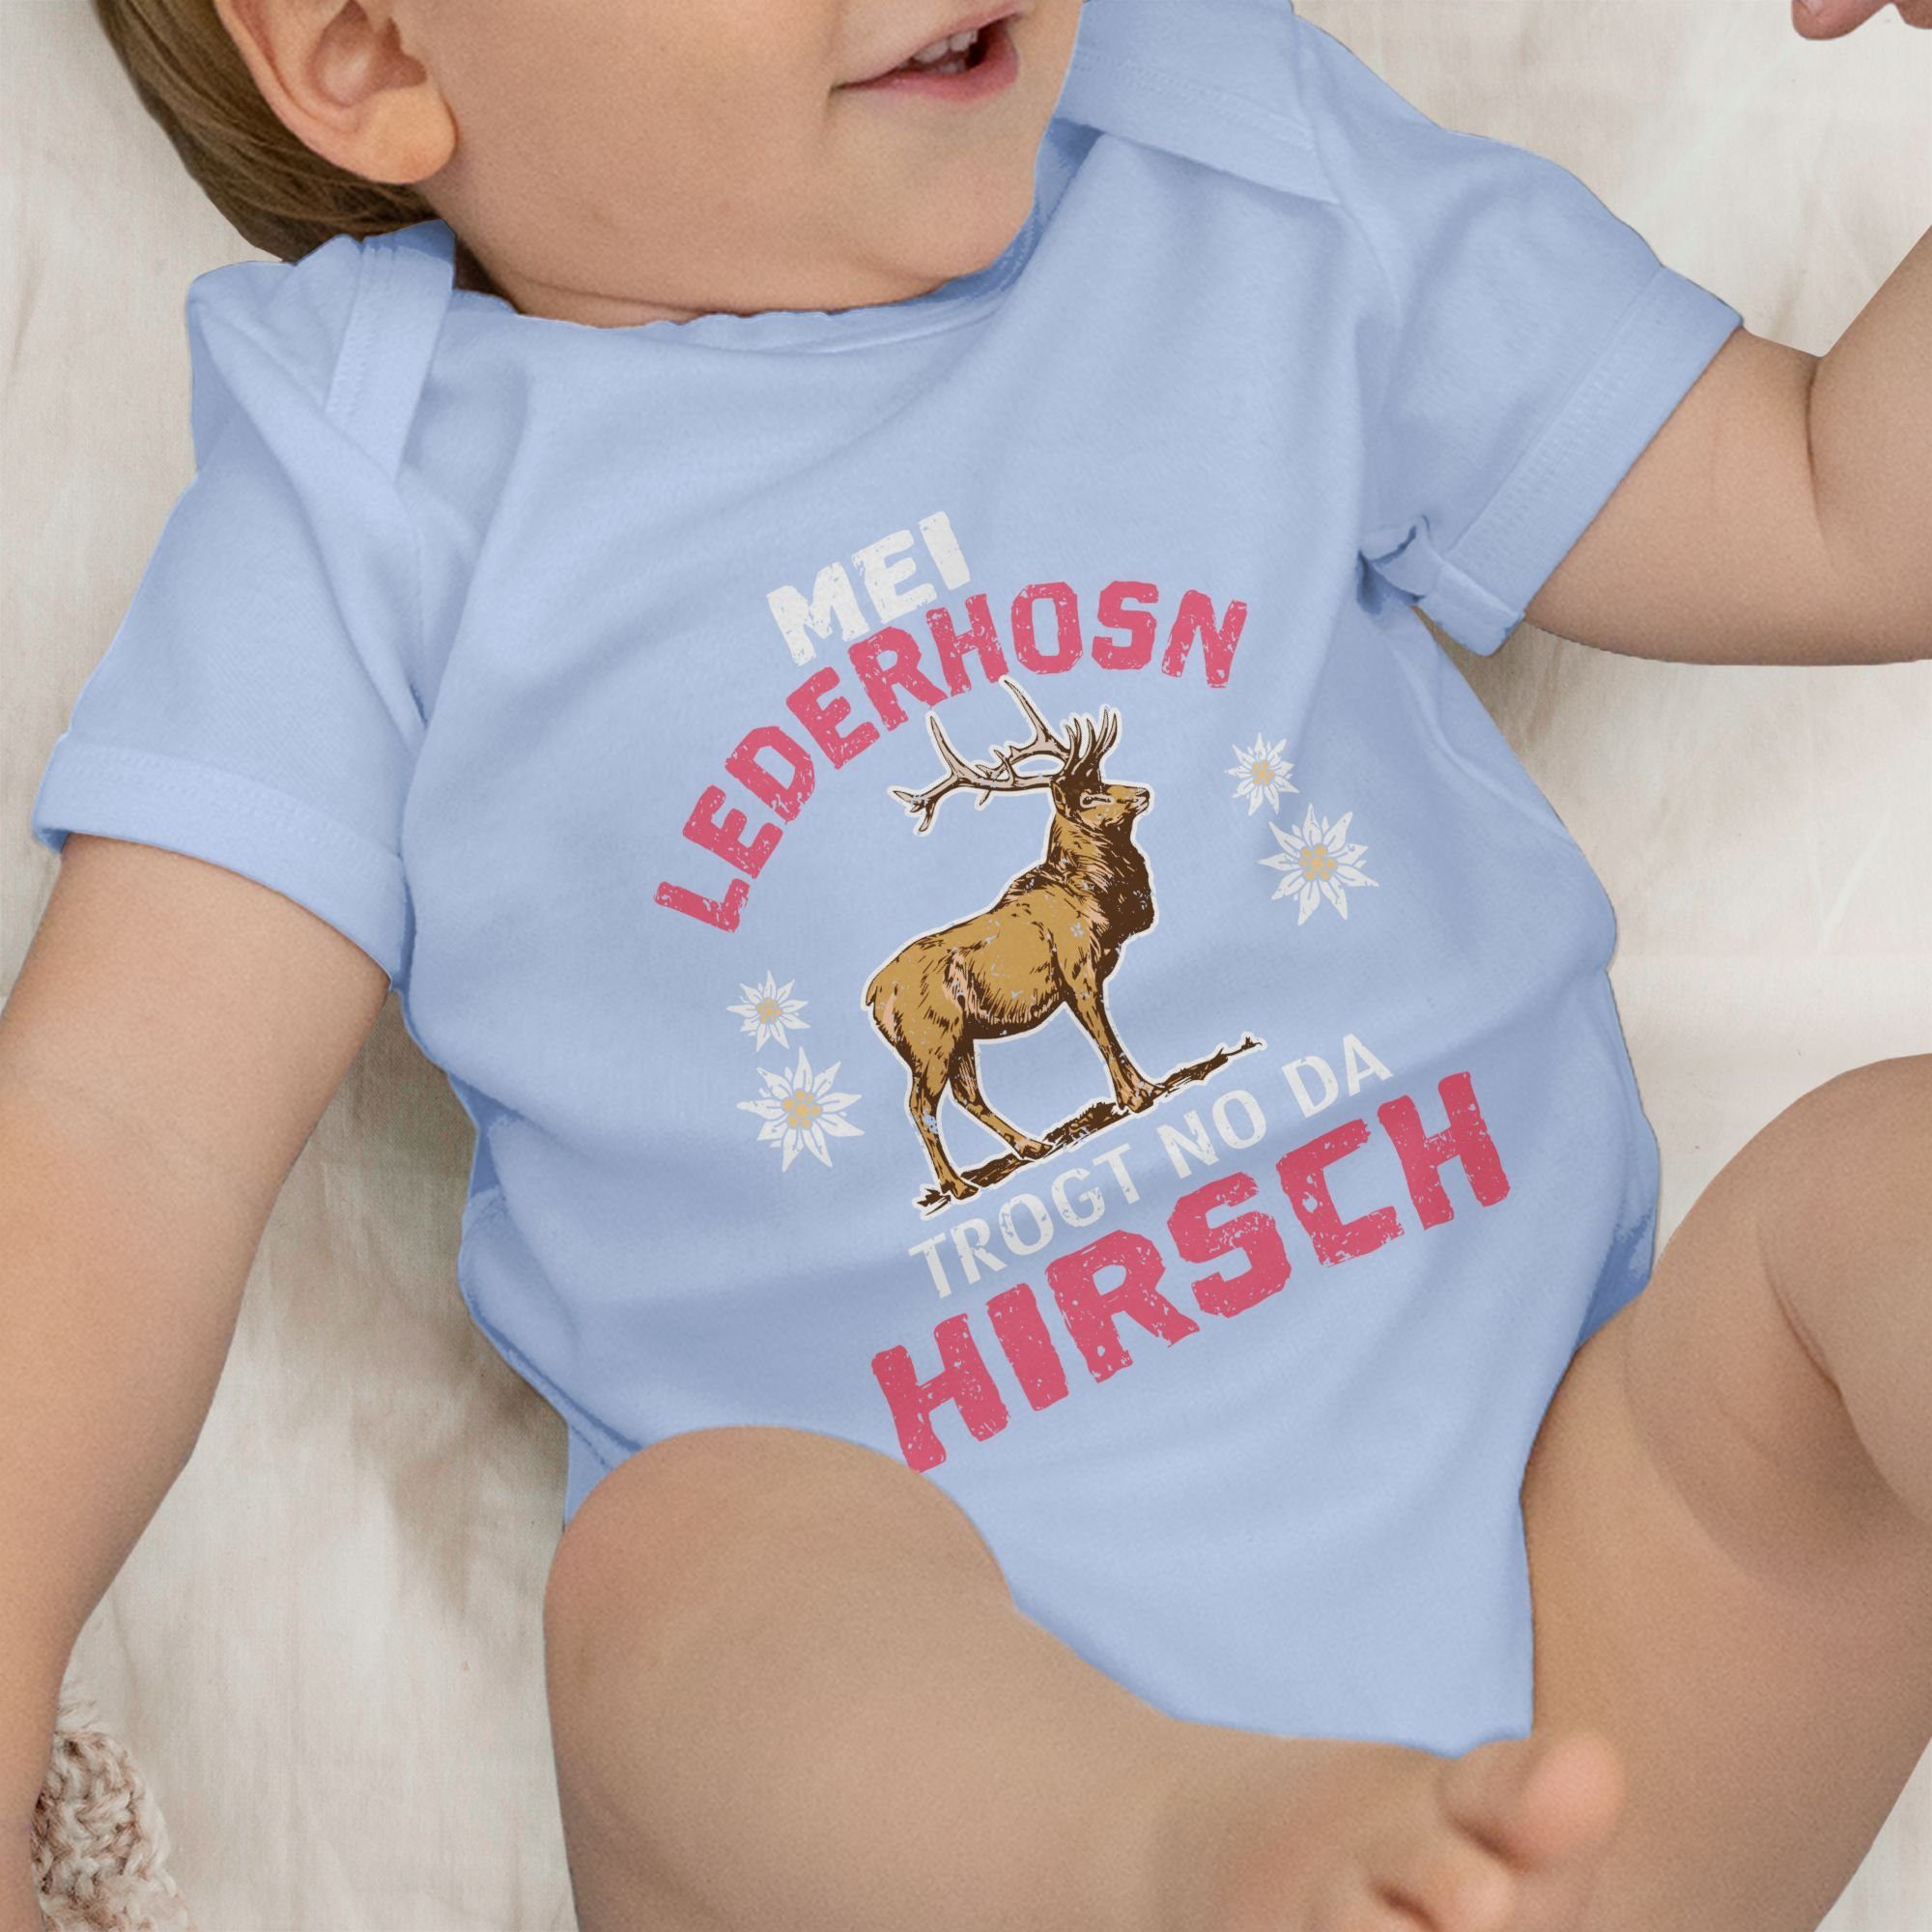 für Lederhosn Babyblau - Mei Hirsch da Outfit Shirtracer Baby Oktoberfest weiß/rot no trogt 3 Shirtbody Mode